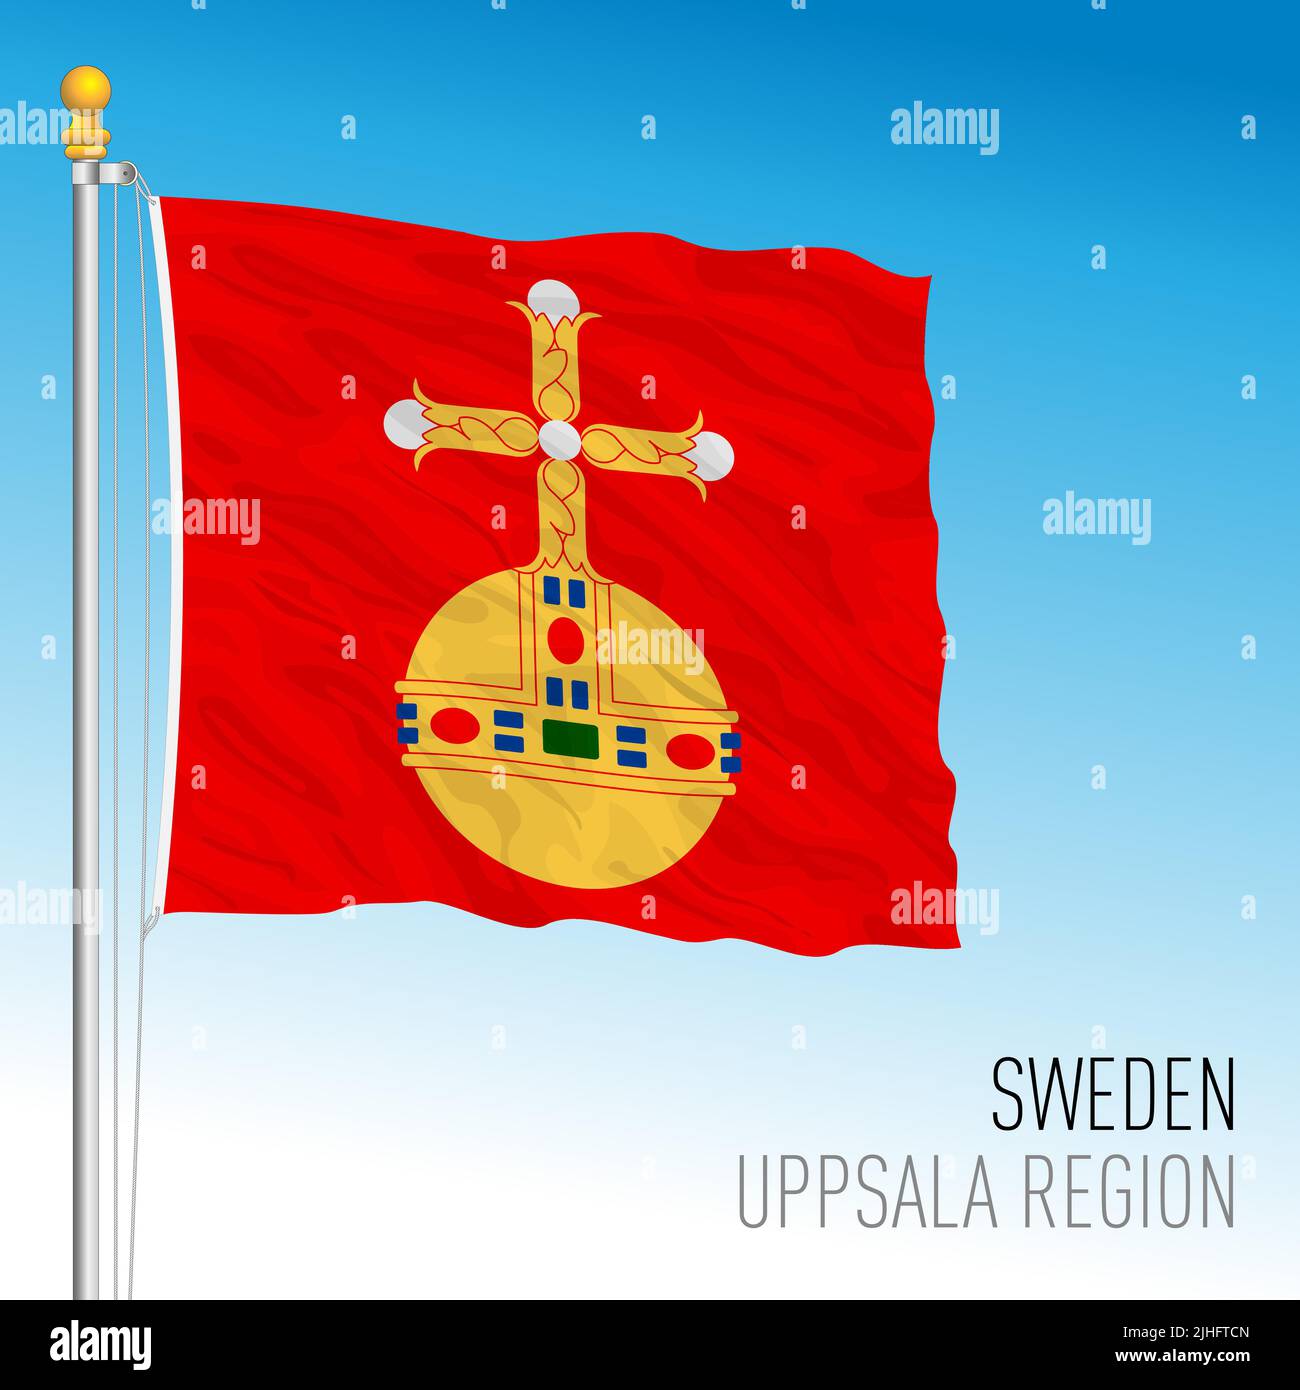 Uppsala county regional flag, Kingdom of Sweden, vector illustration Stock Vector